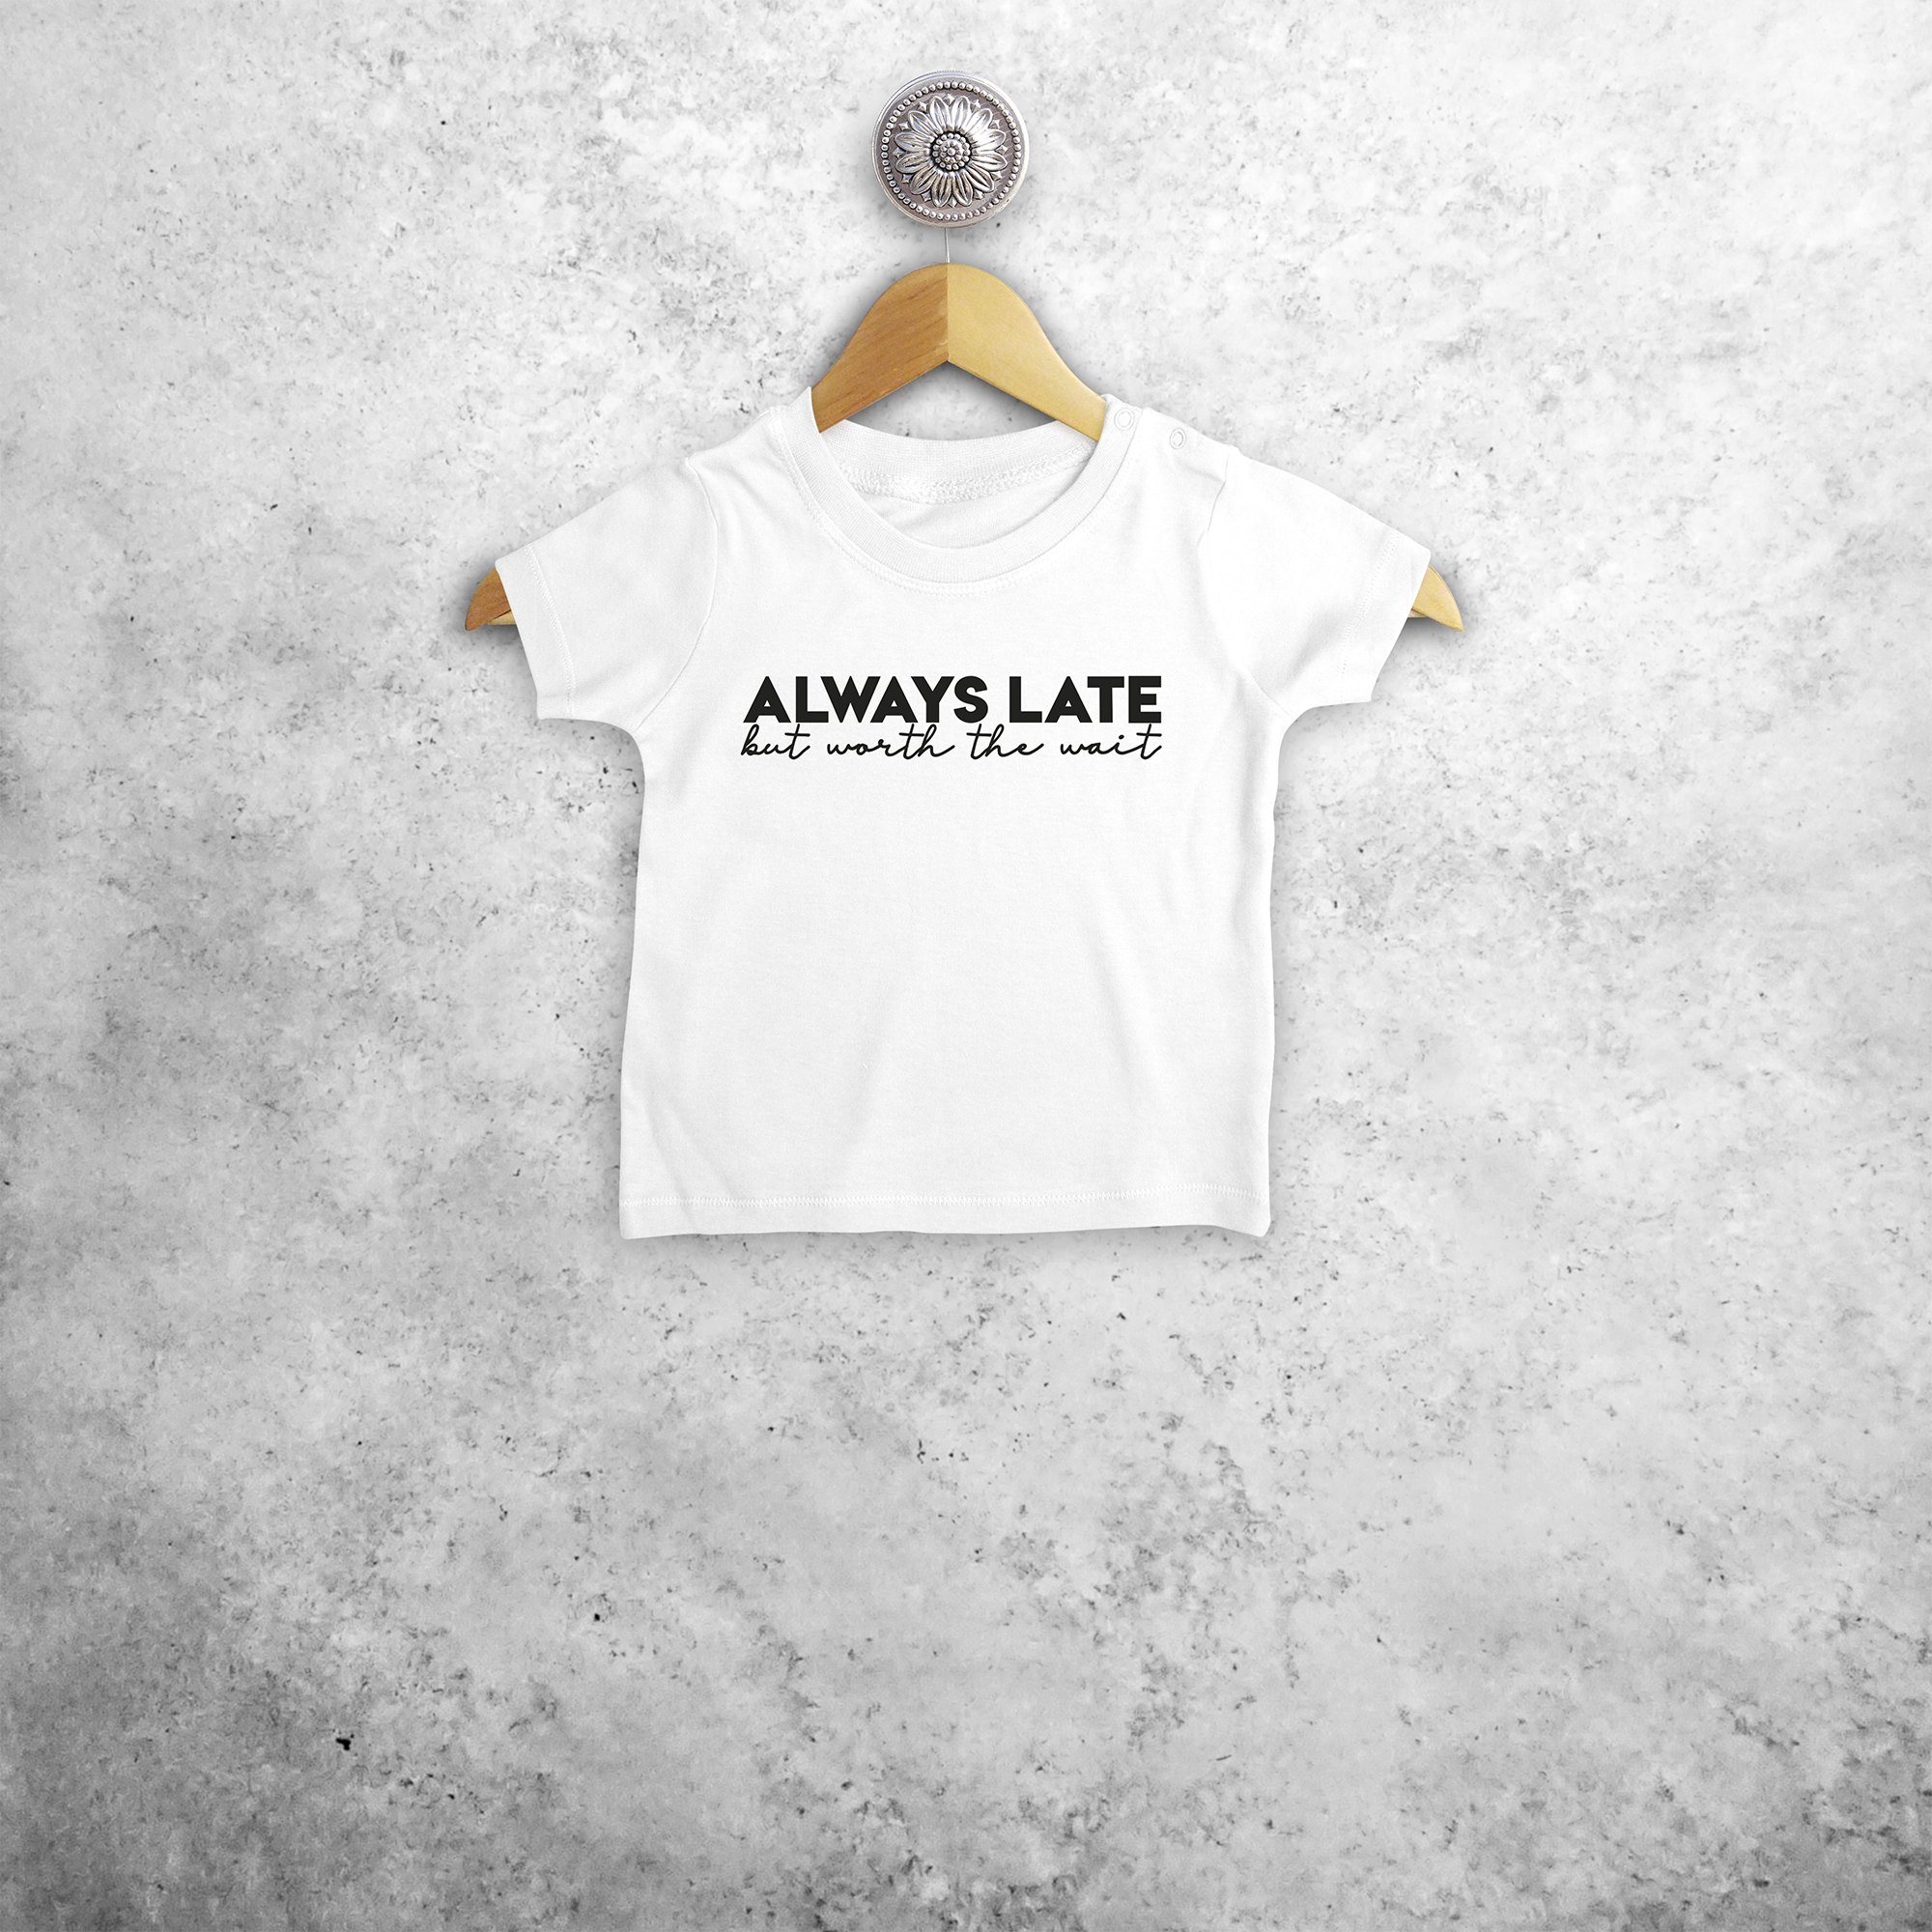 'Always late, but worth the wait' baby shortsleeve shirt